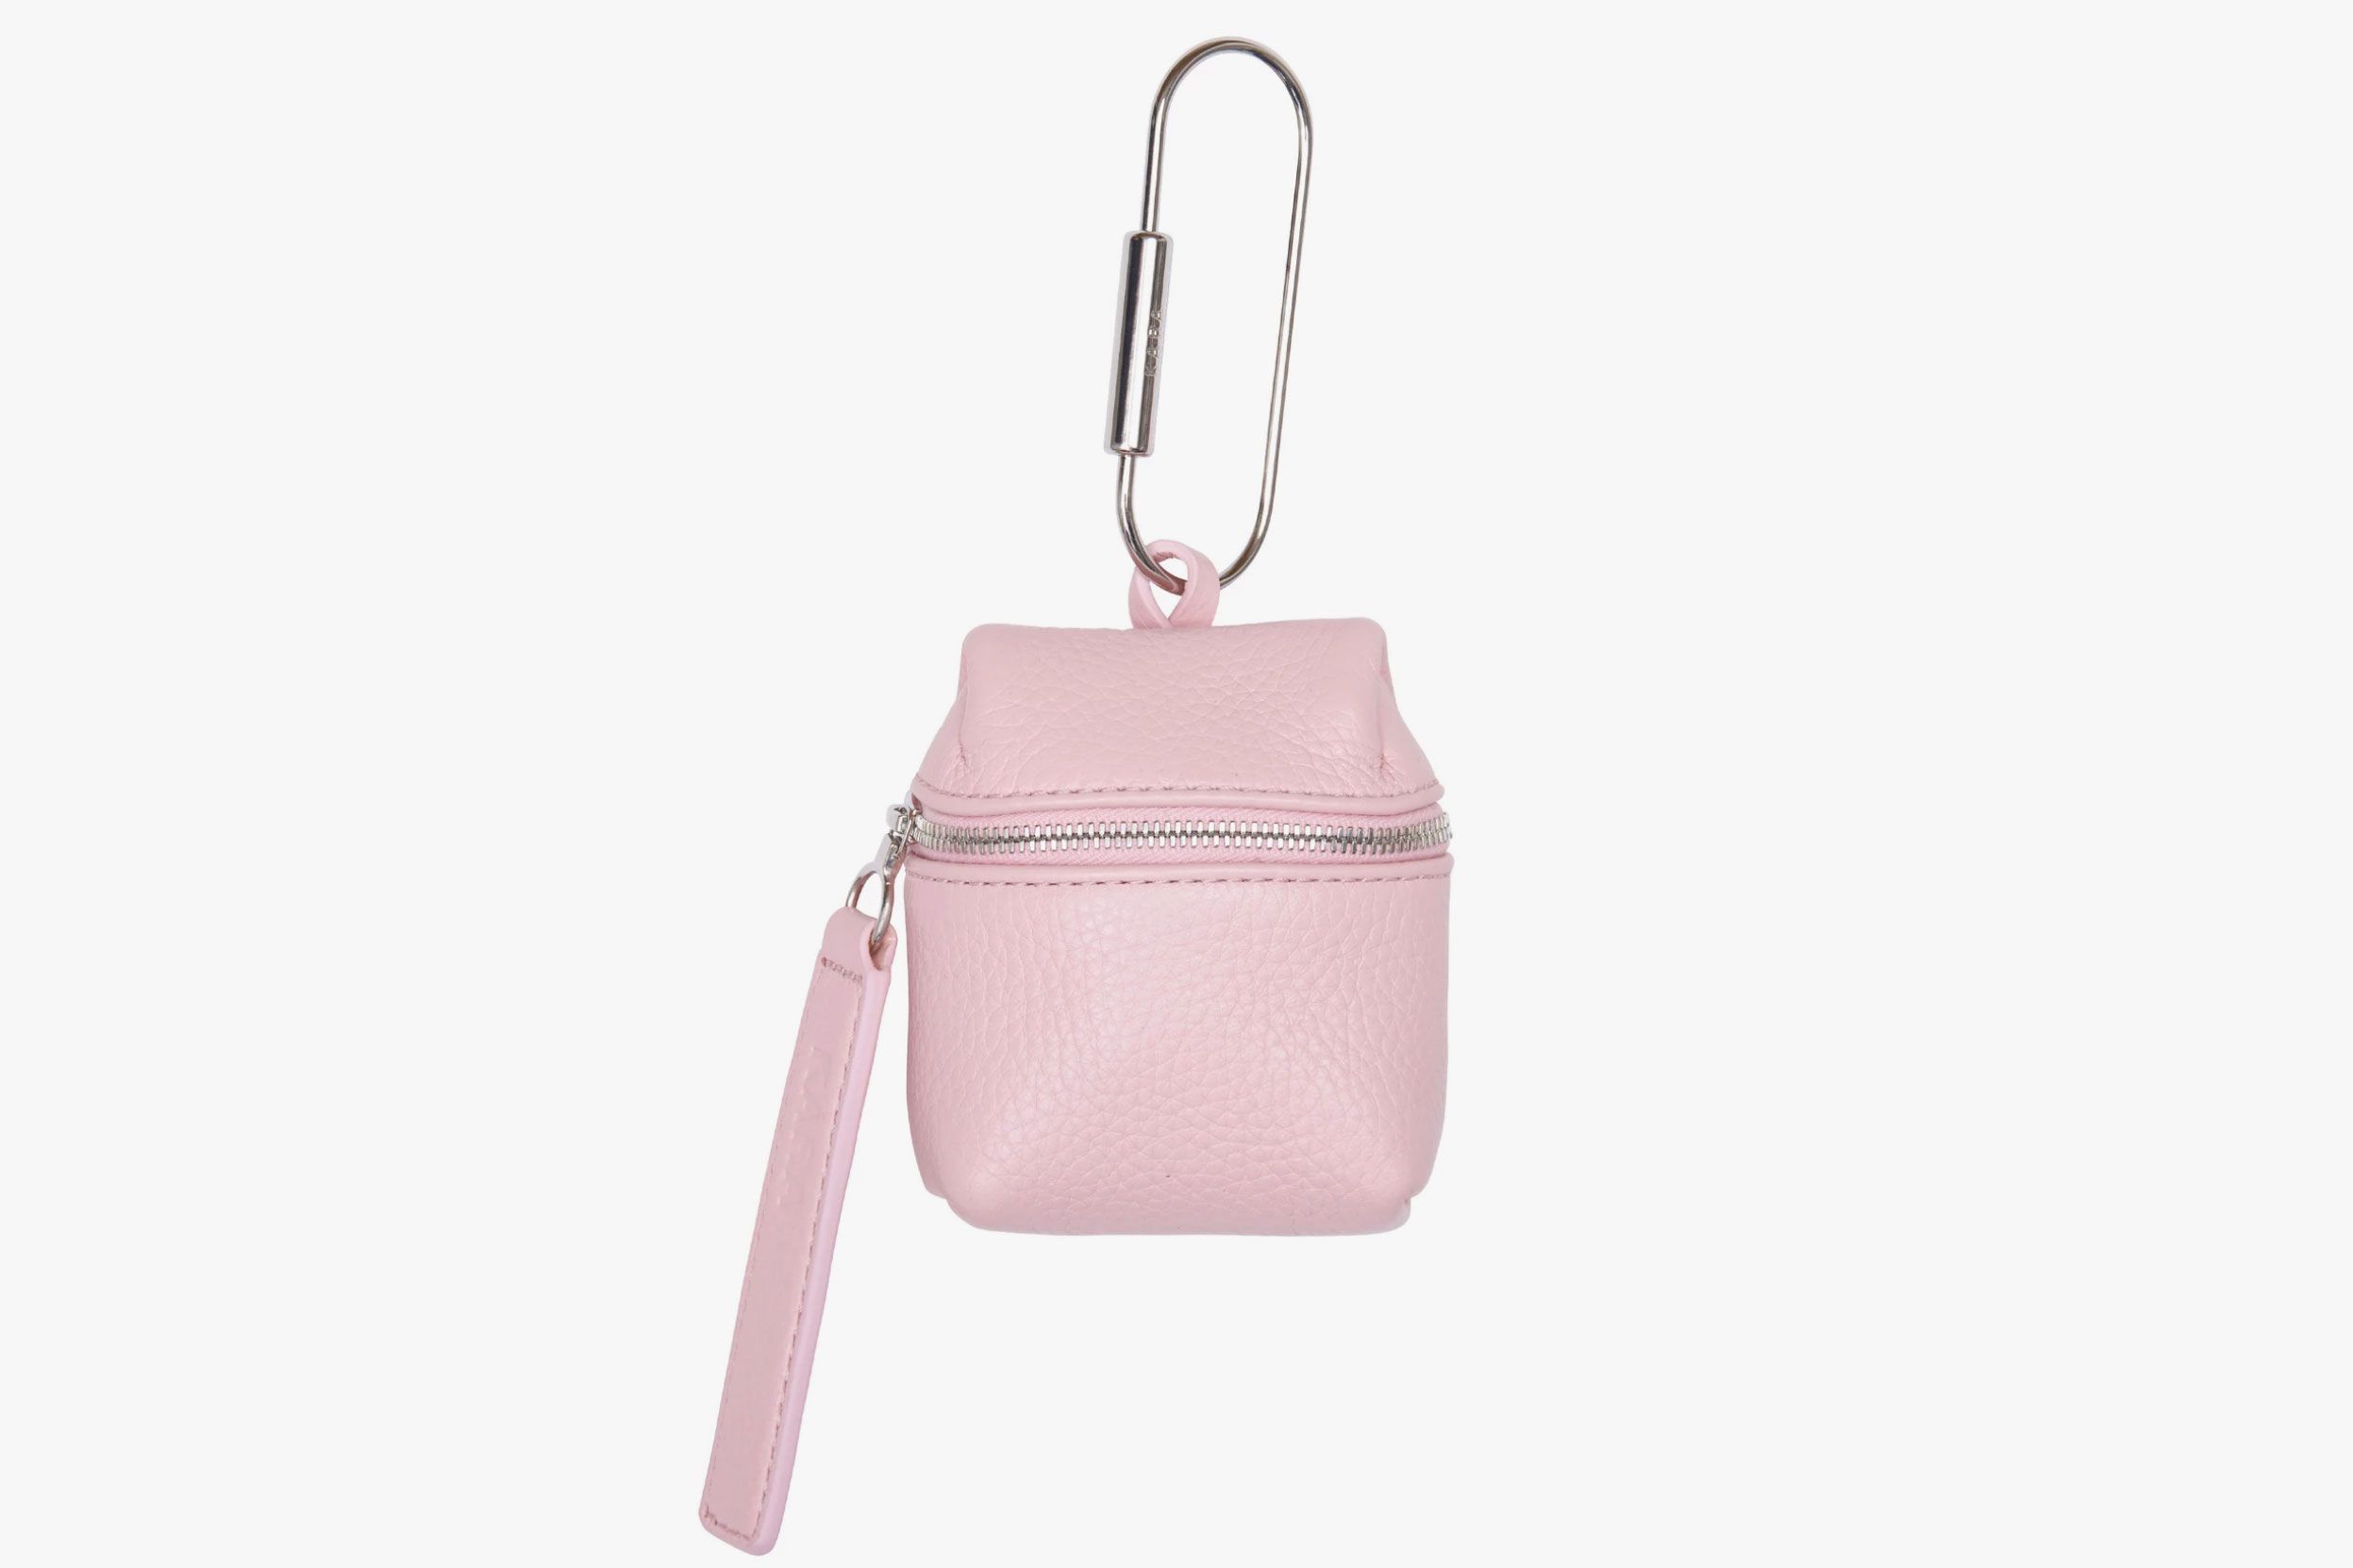 Kara Designer Handbags Are On Sale Now